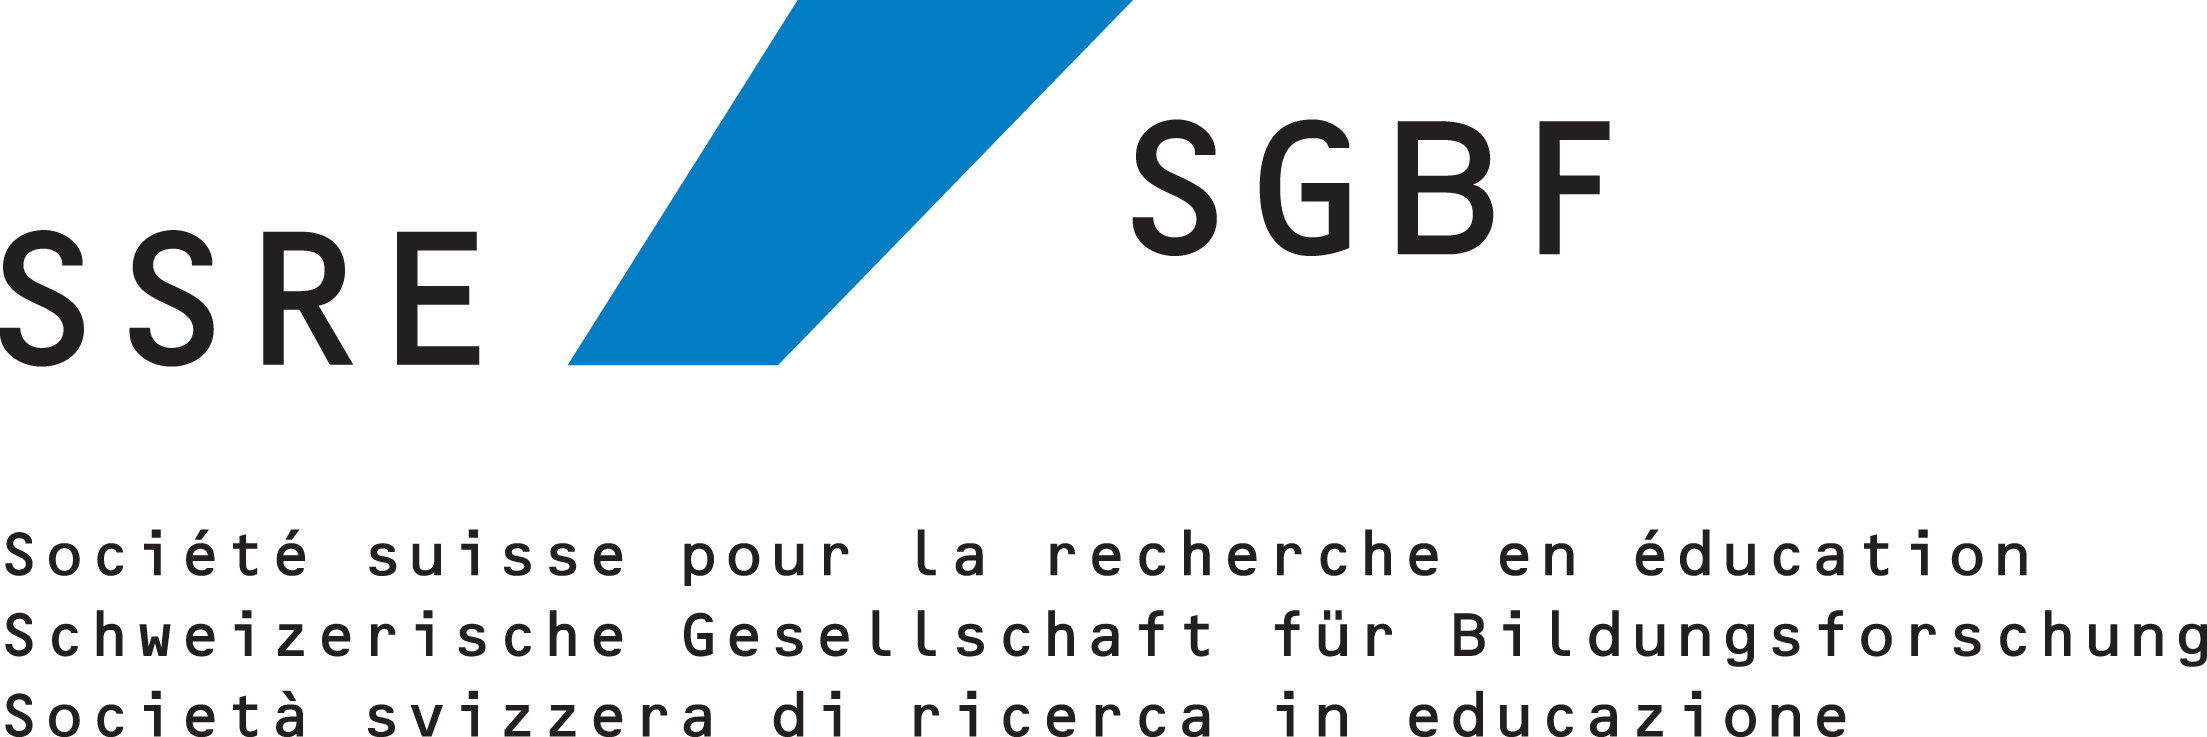 logo_sgbf.png